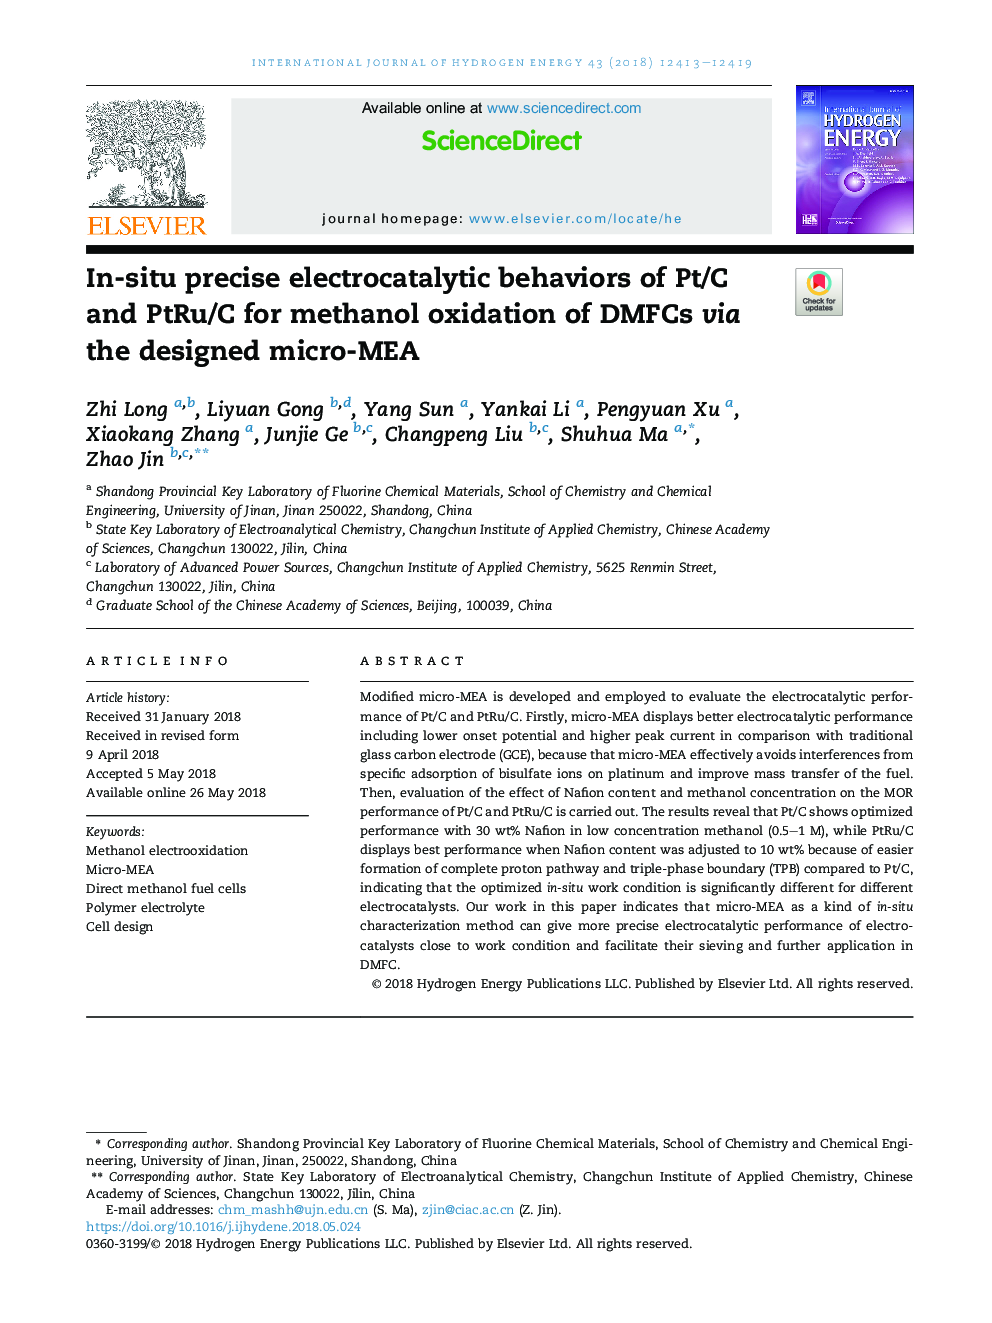 In-situ precise electrocatalytic behaviors of Pt/C and PtRu/C for methanol oxidation of DMFCs via the designed micro-MEA